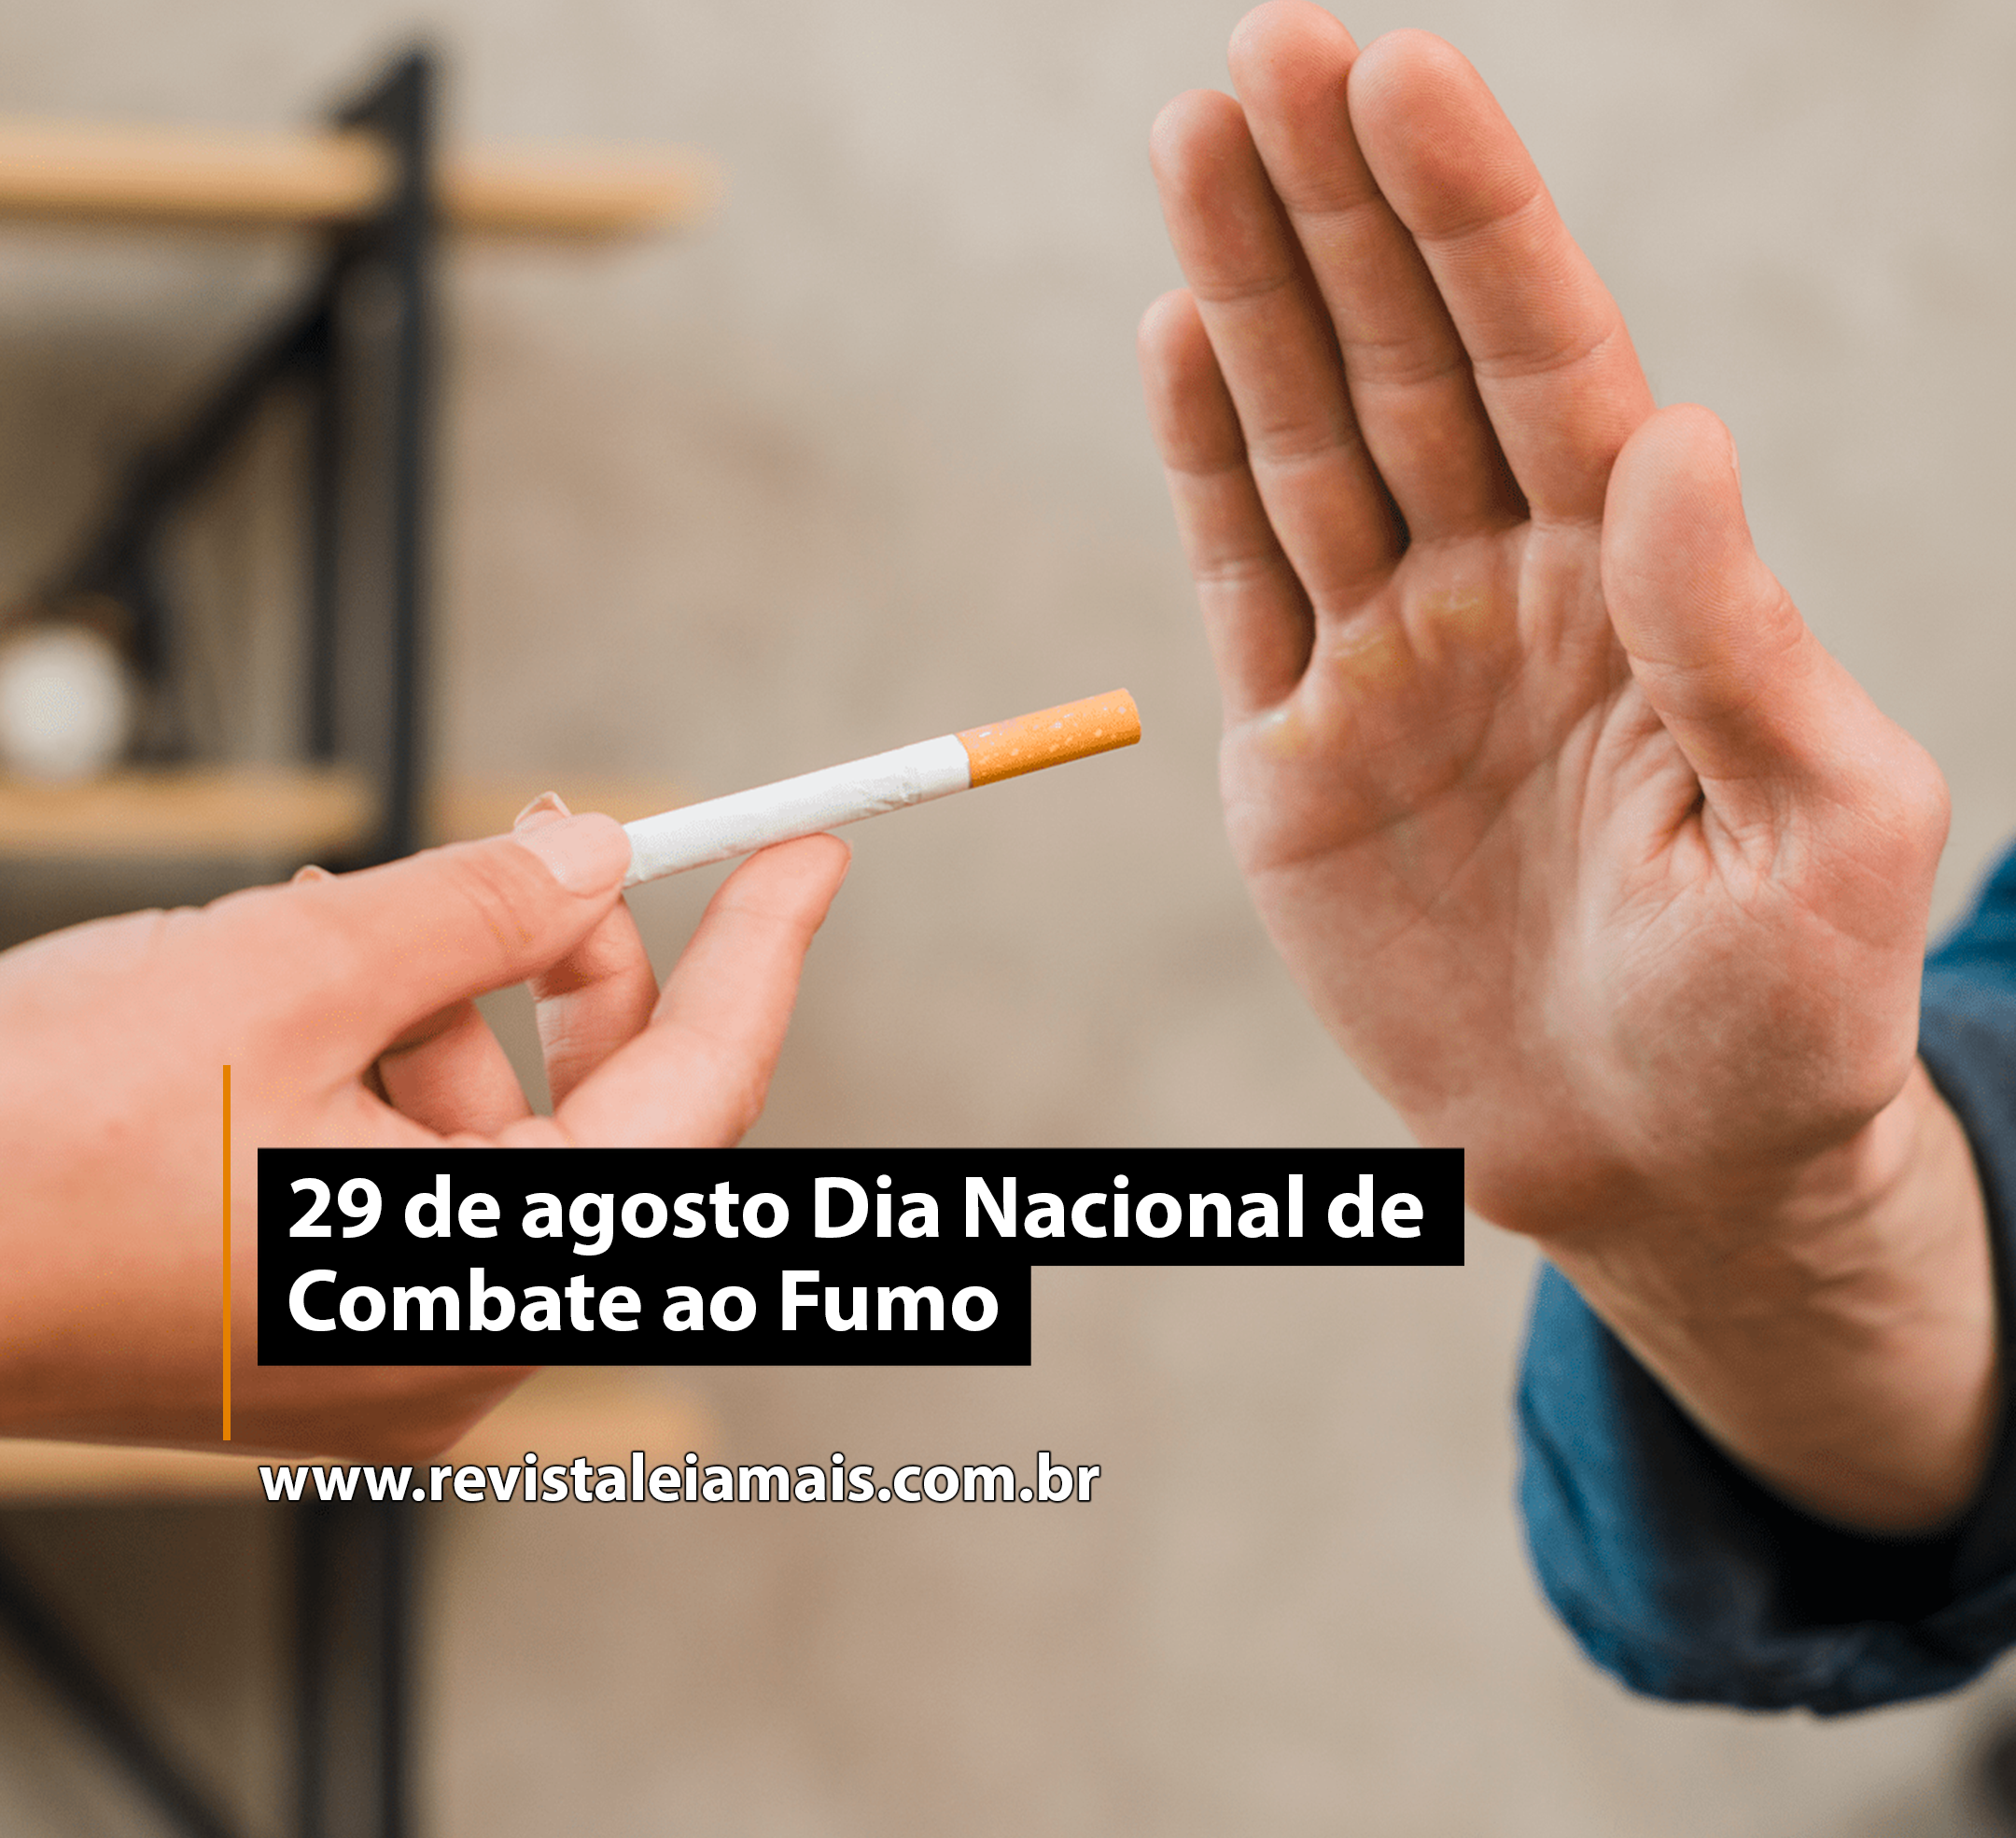 29 de agosto Dia Nacional de Combate ao Fumo